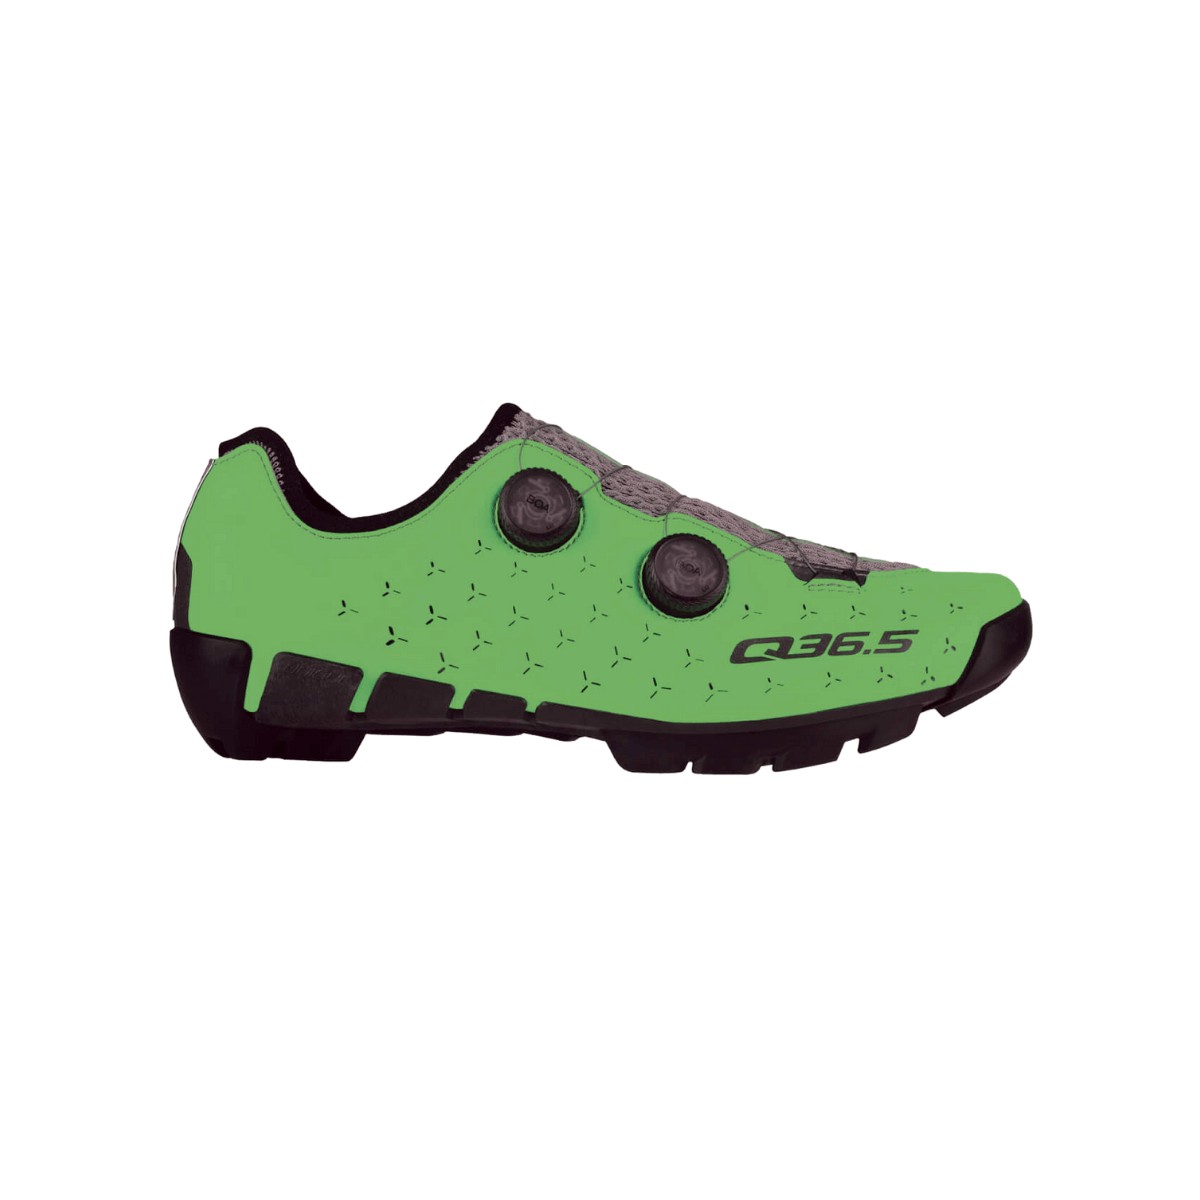 Chaussures Q36.5 Unique Adventure Fluor Green